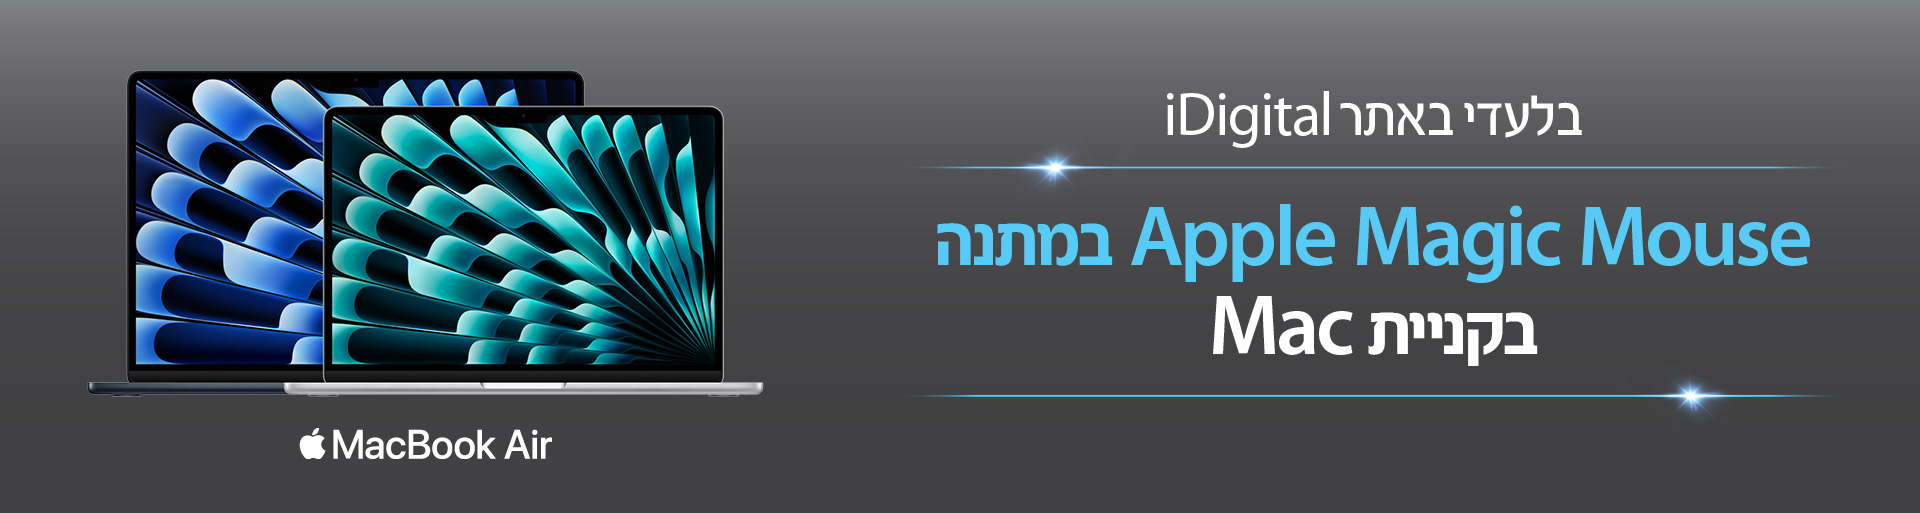 
iDigital - המומחים של Apple בישראל.
10% הנחה על מחשבי ה-Mac